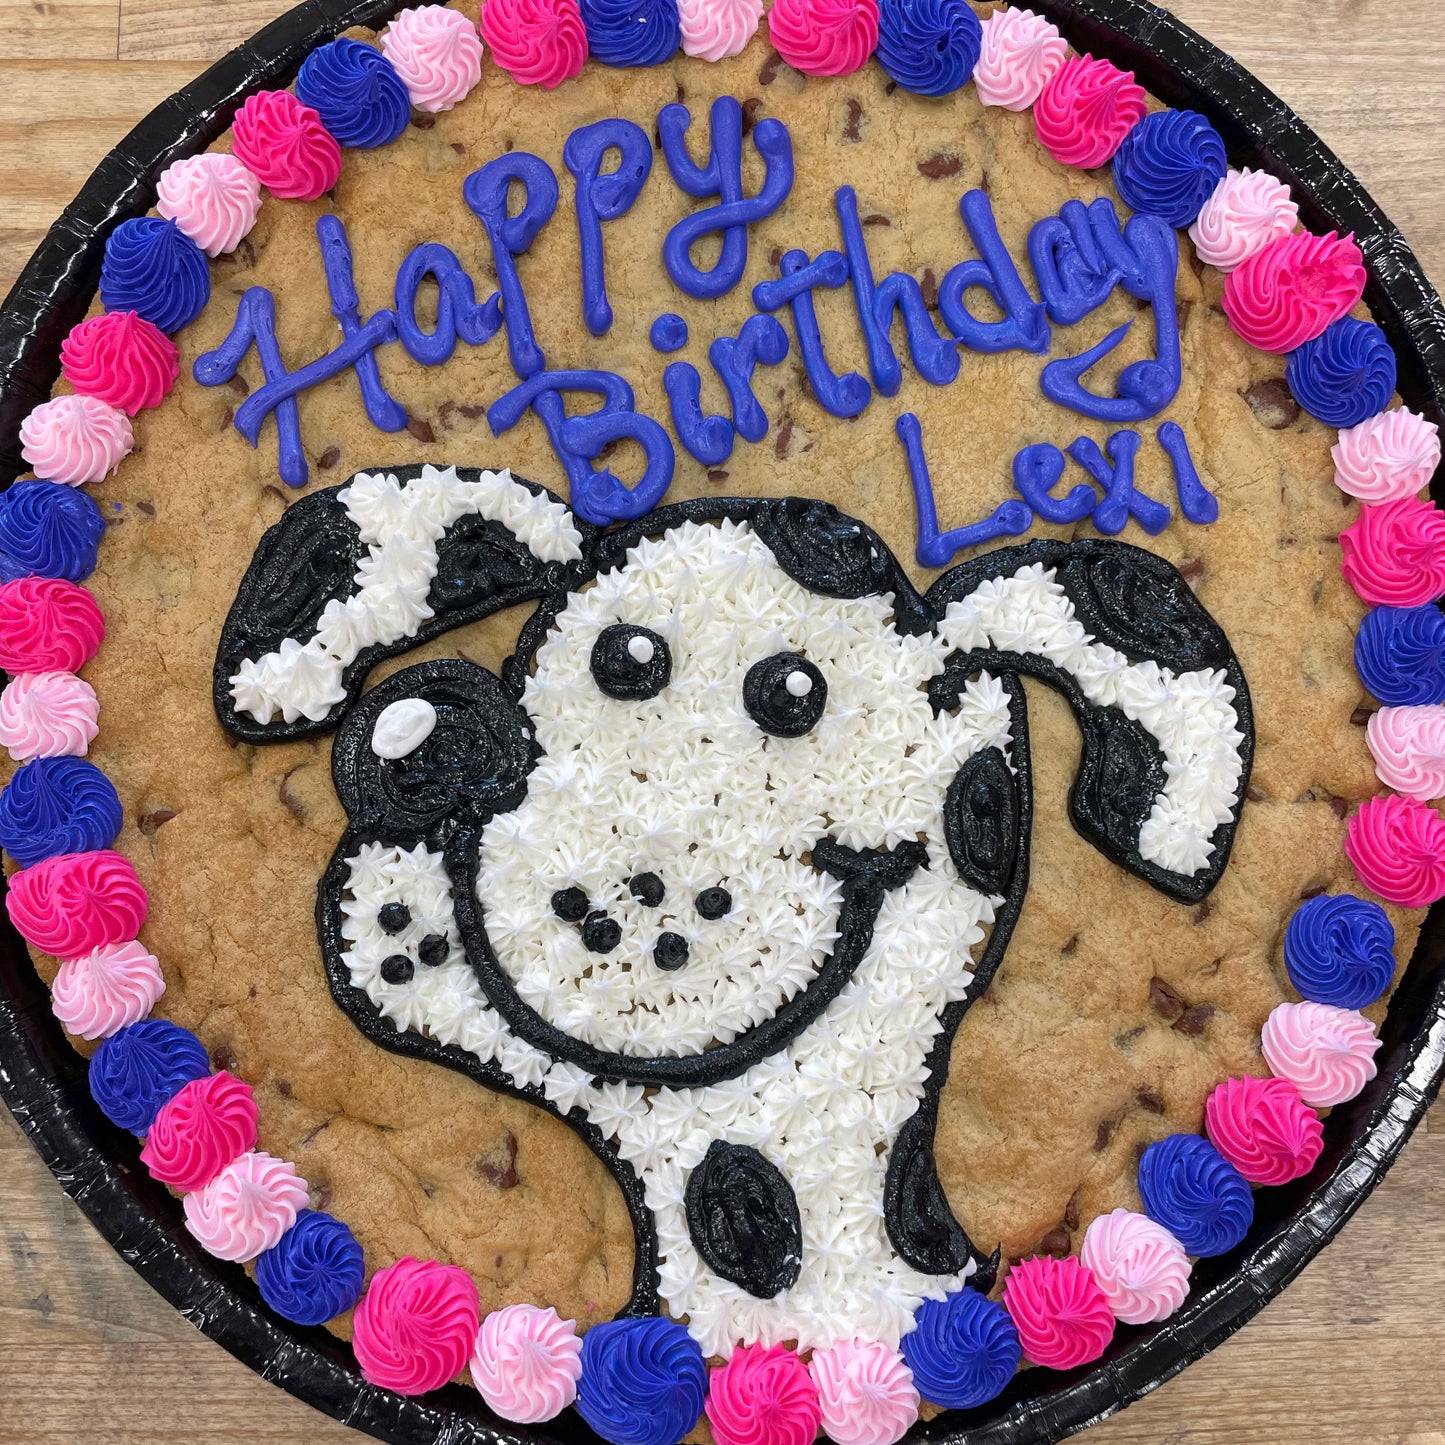 12" Celebration Cookie - Decorated